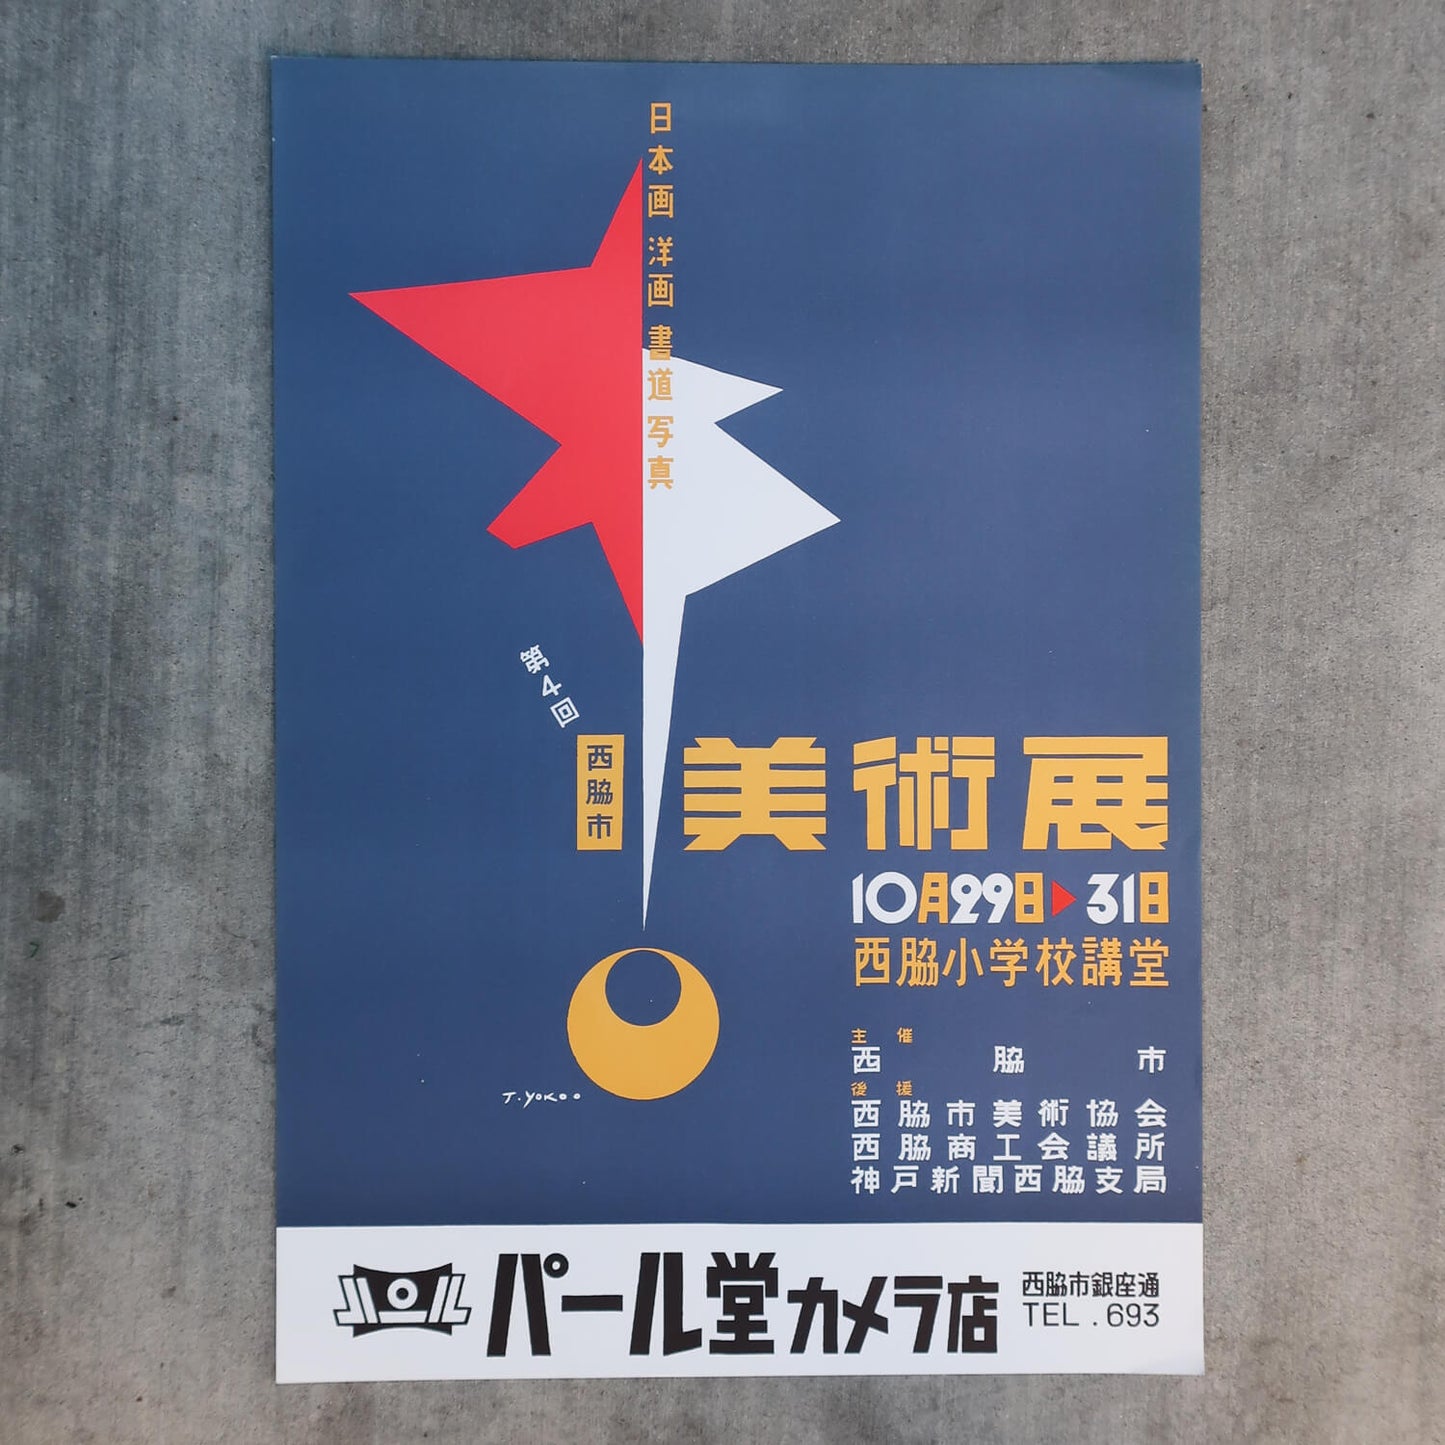 Nishiwaki Art Exhibition 1956 Poster (Reprint) by Tadanori Yokoo